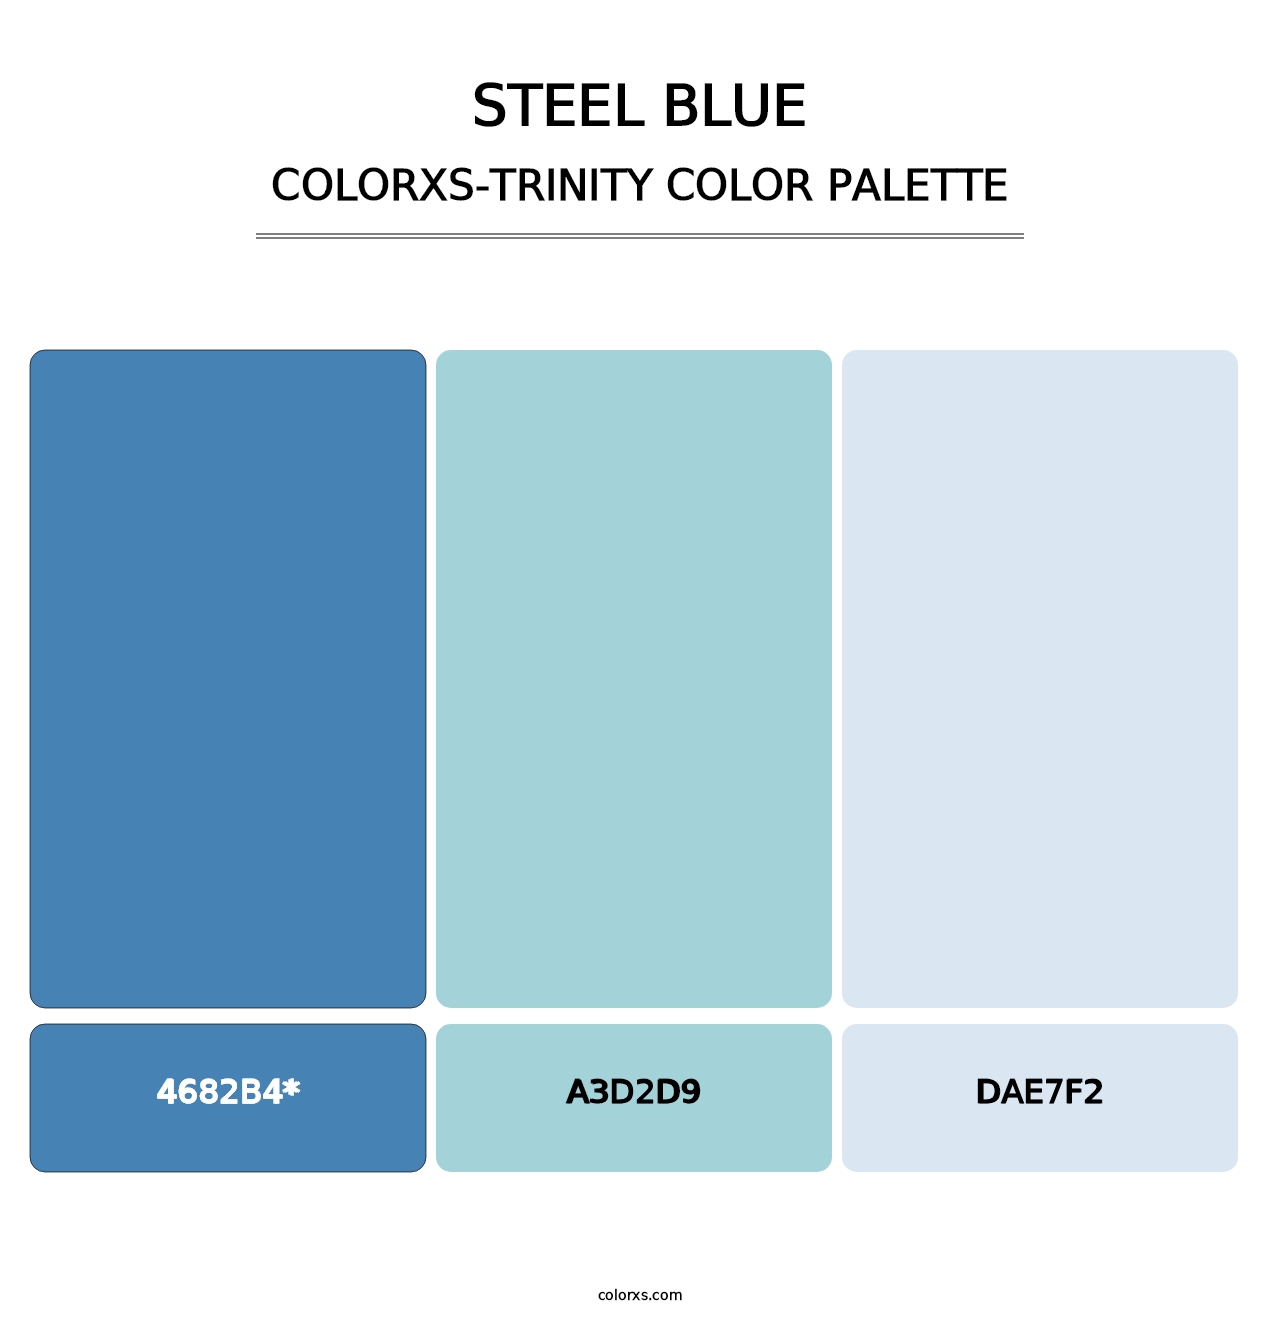 Steel Blue - Colorxs Trinity Palette